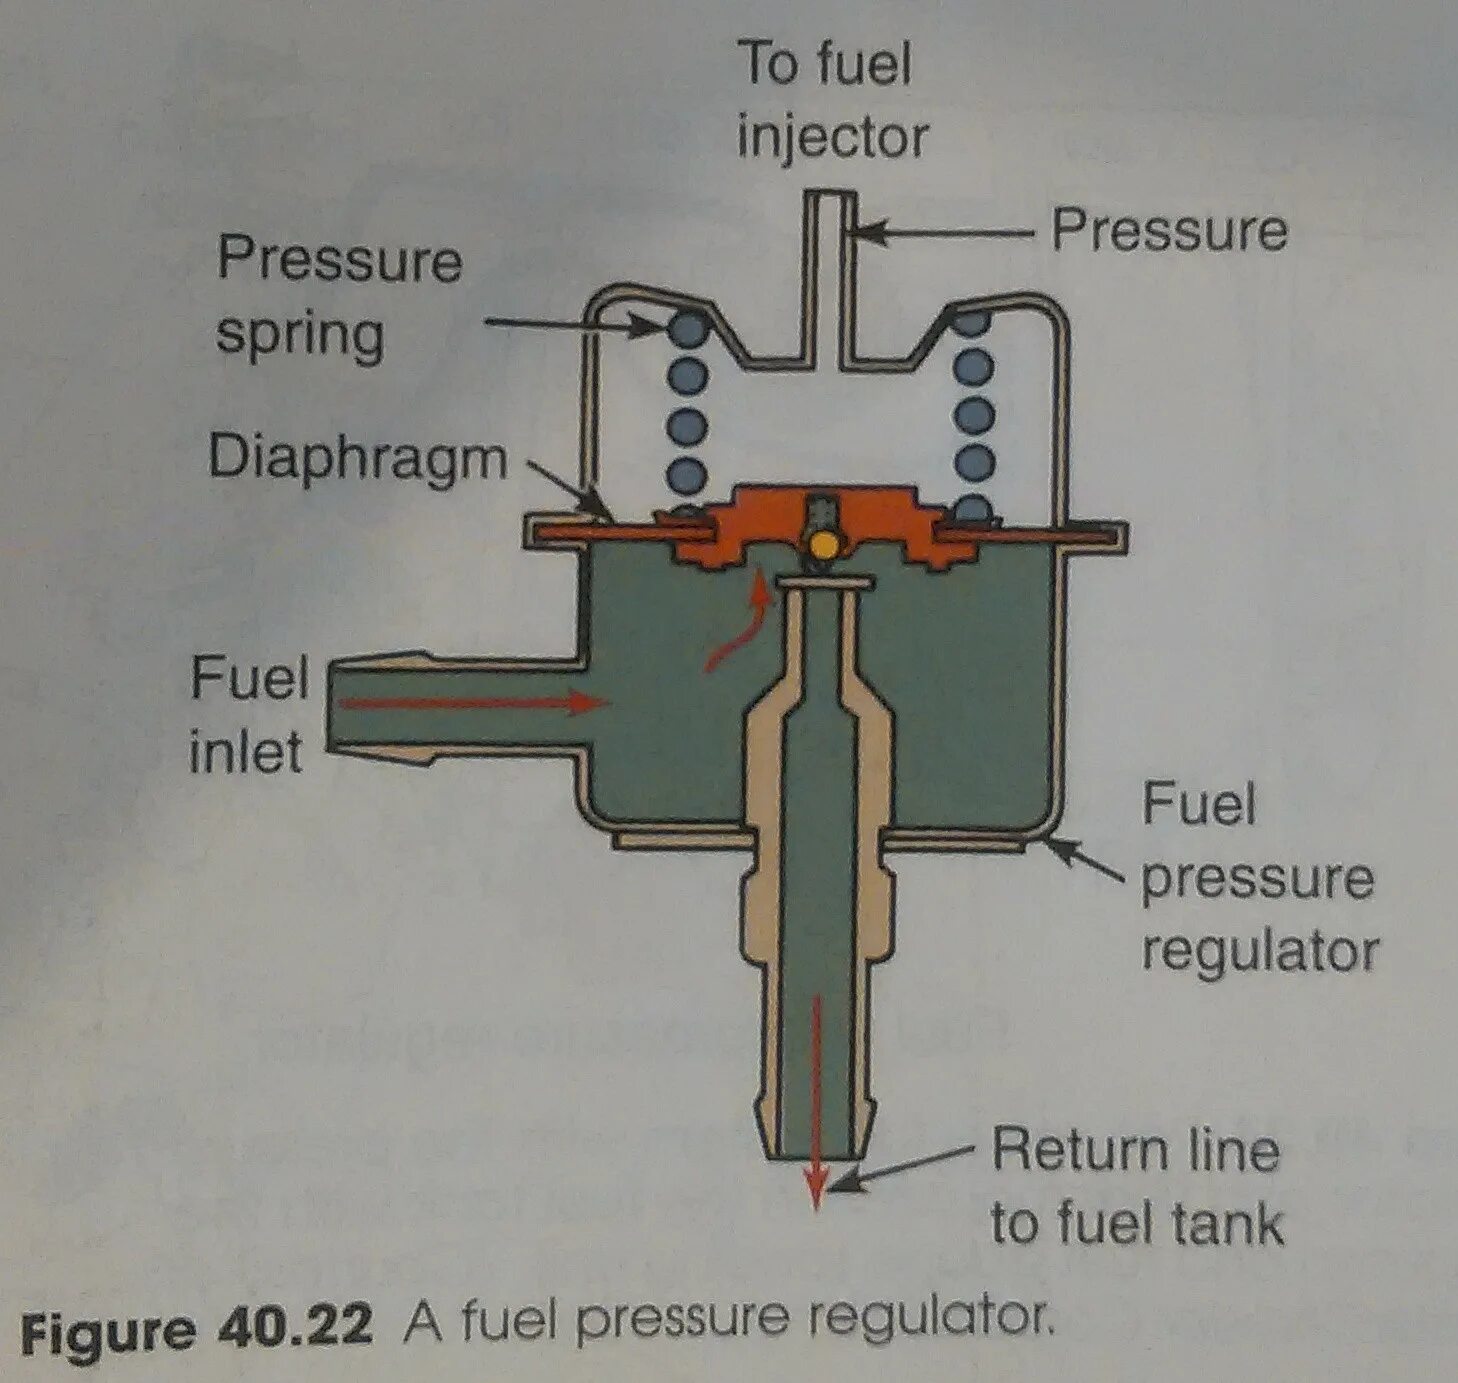 Регулятор давления топлива РДТ. Принцип действия регулятора давления топлива. Вакуумный регулятор давления топлива Мазда. Регулятор давления топлива 500kpa.